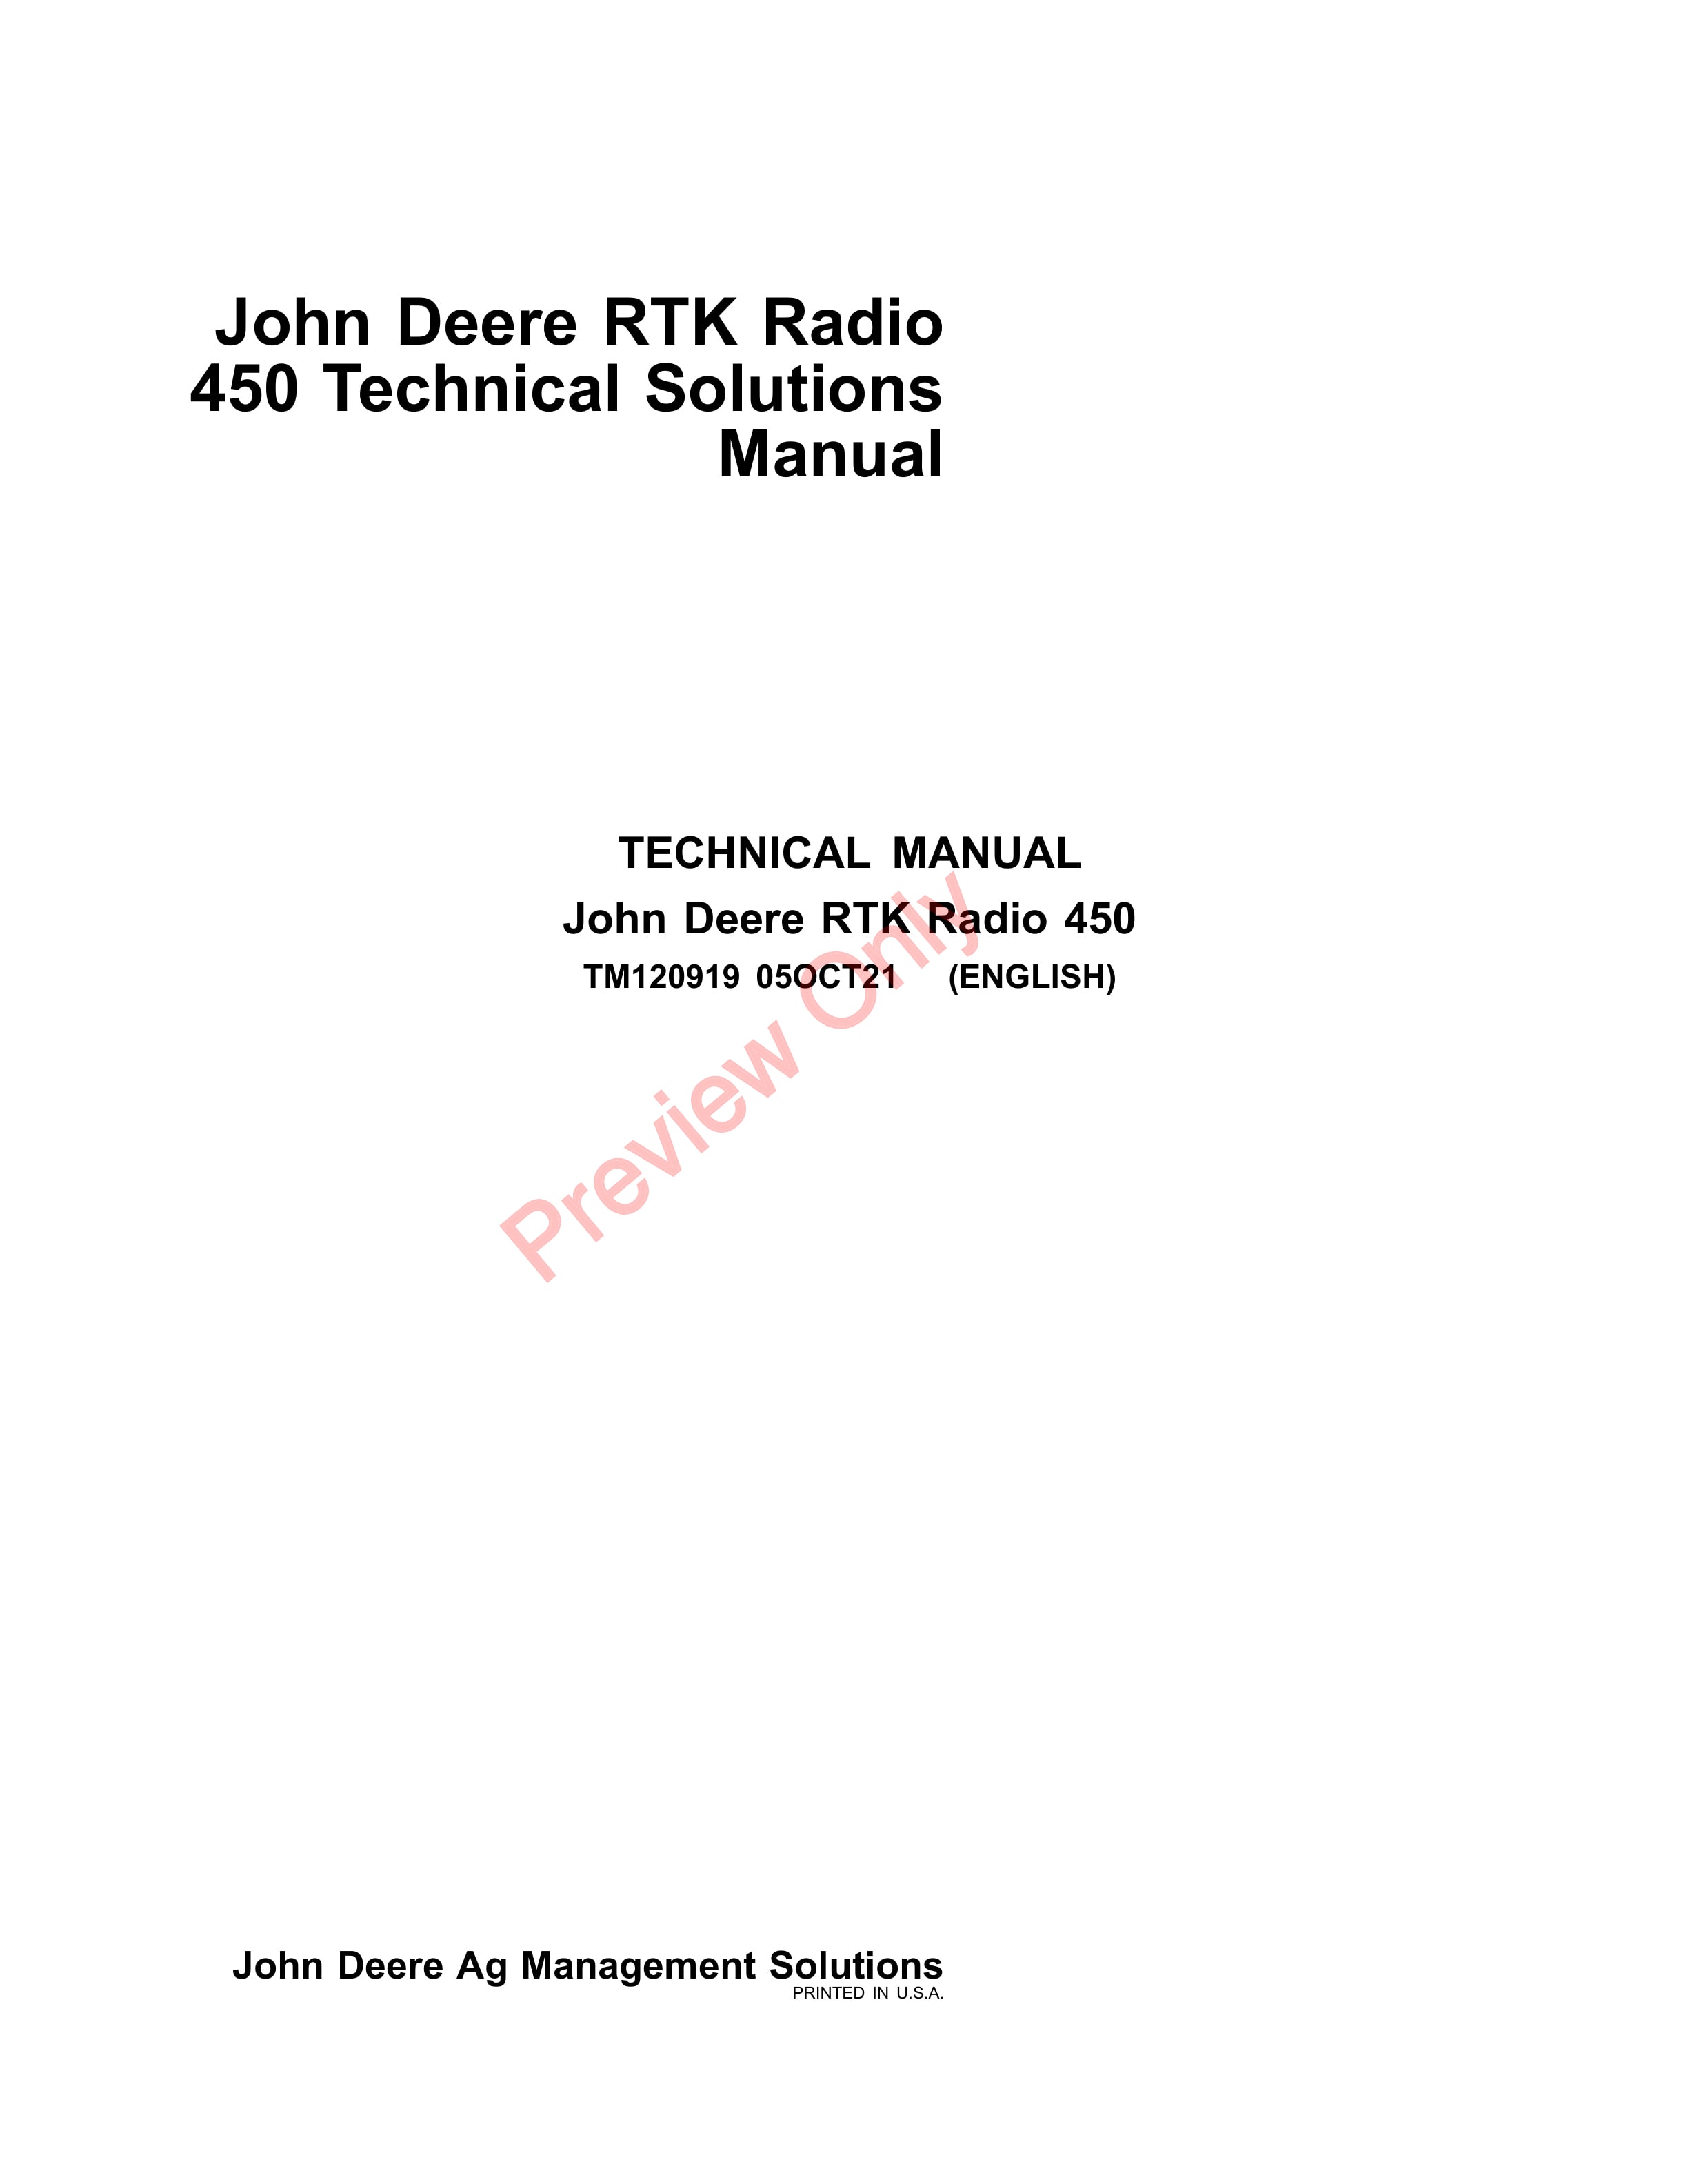 John Deere RTK Radio 450 Technical Manual TM120919 05OCT21 1